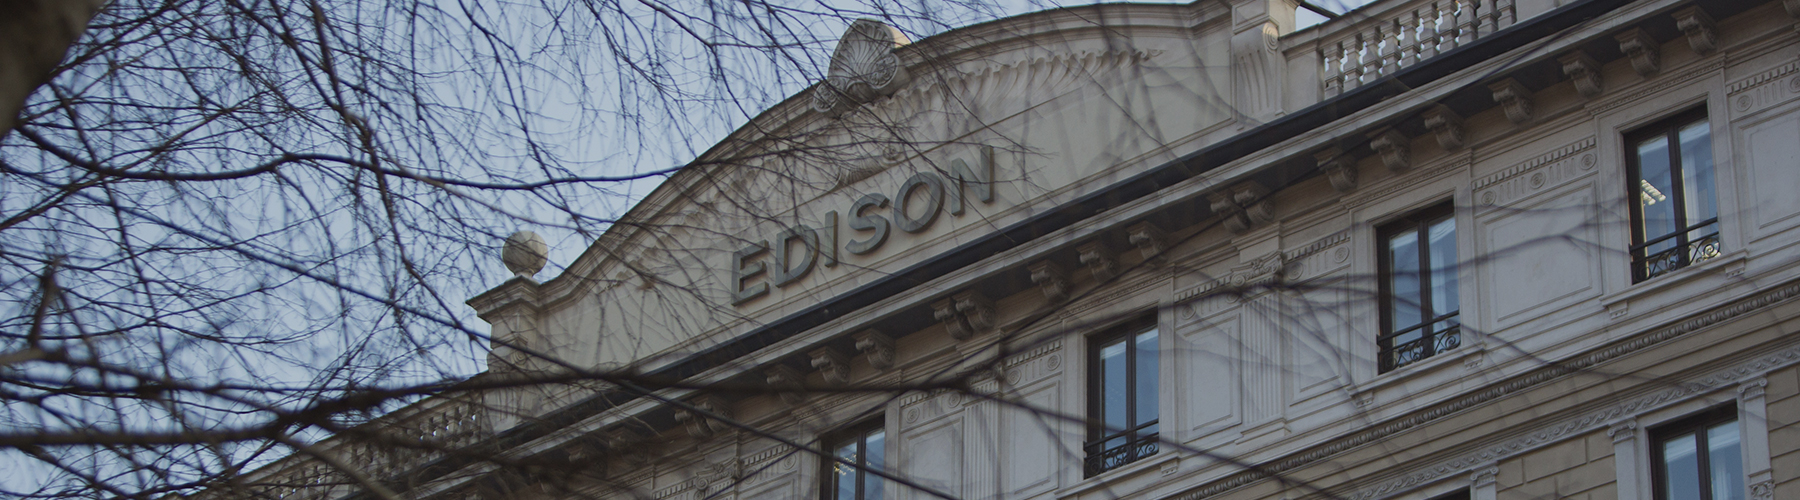 Edison